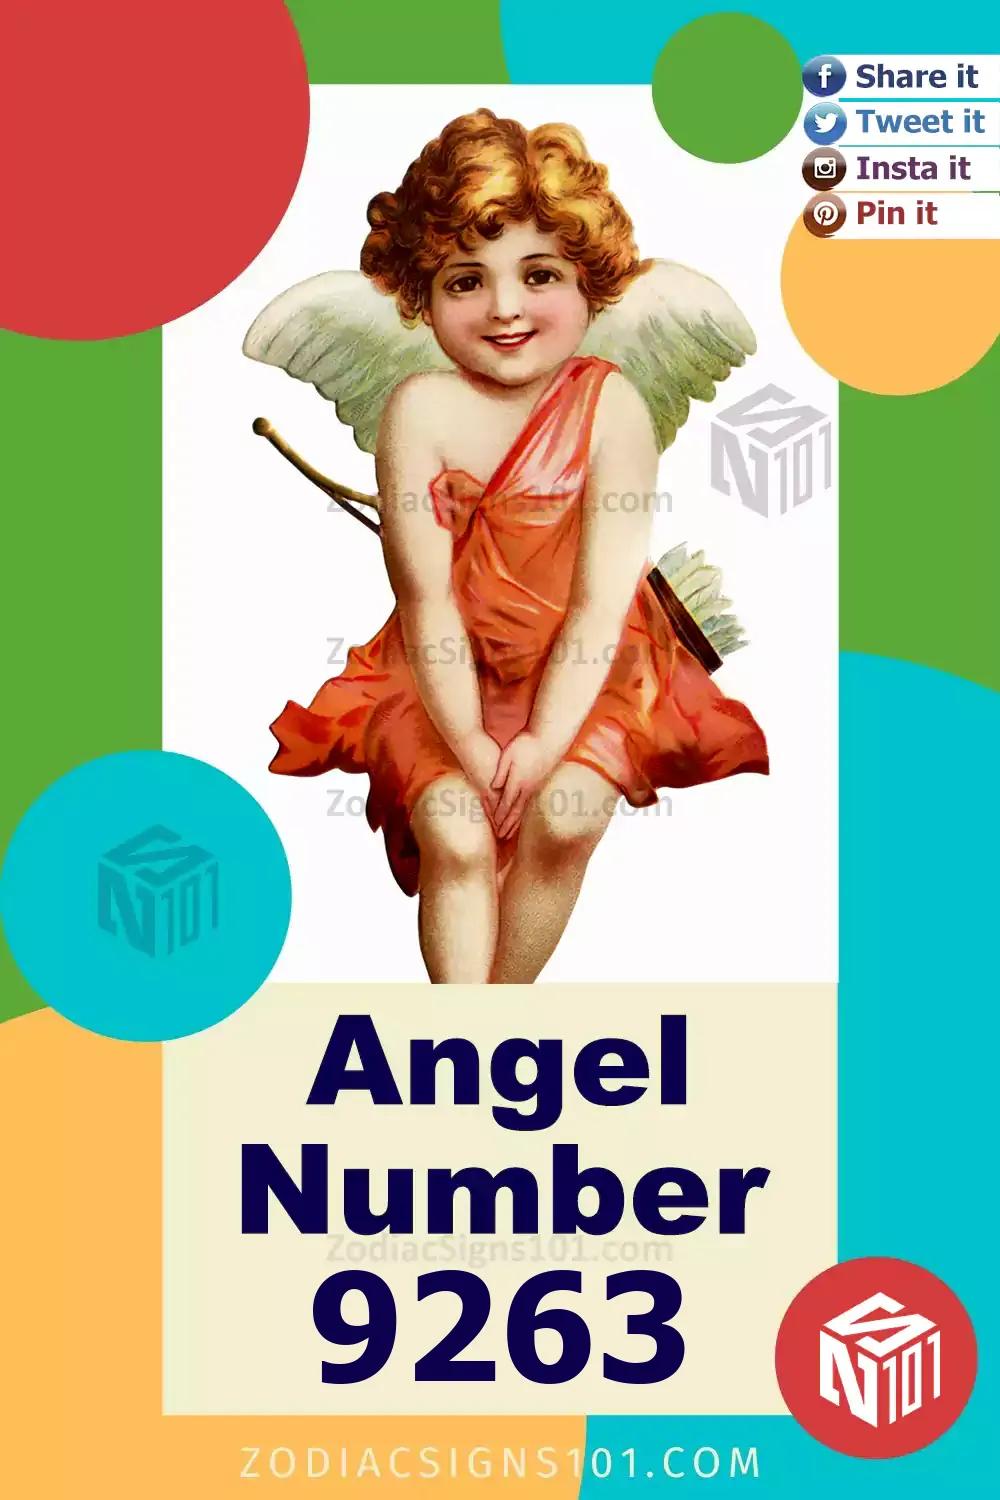 9263-Angel-Number-Meaning.jpg